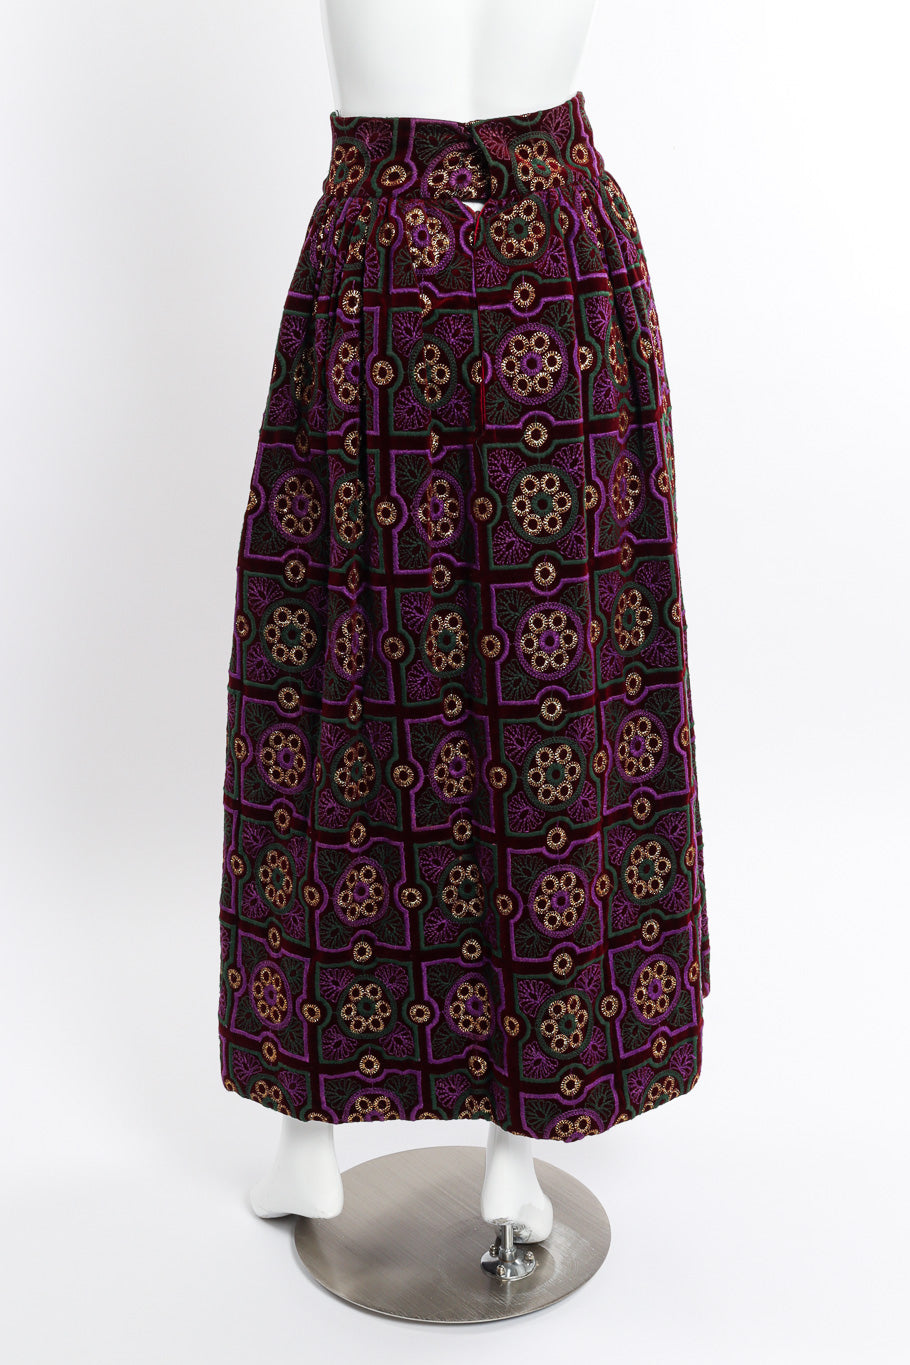 Vintage Adolfo Geometric Embroidered Velvet Skirt back view on mannequin @recessla